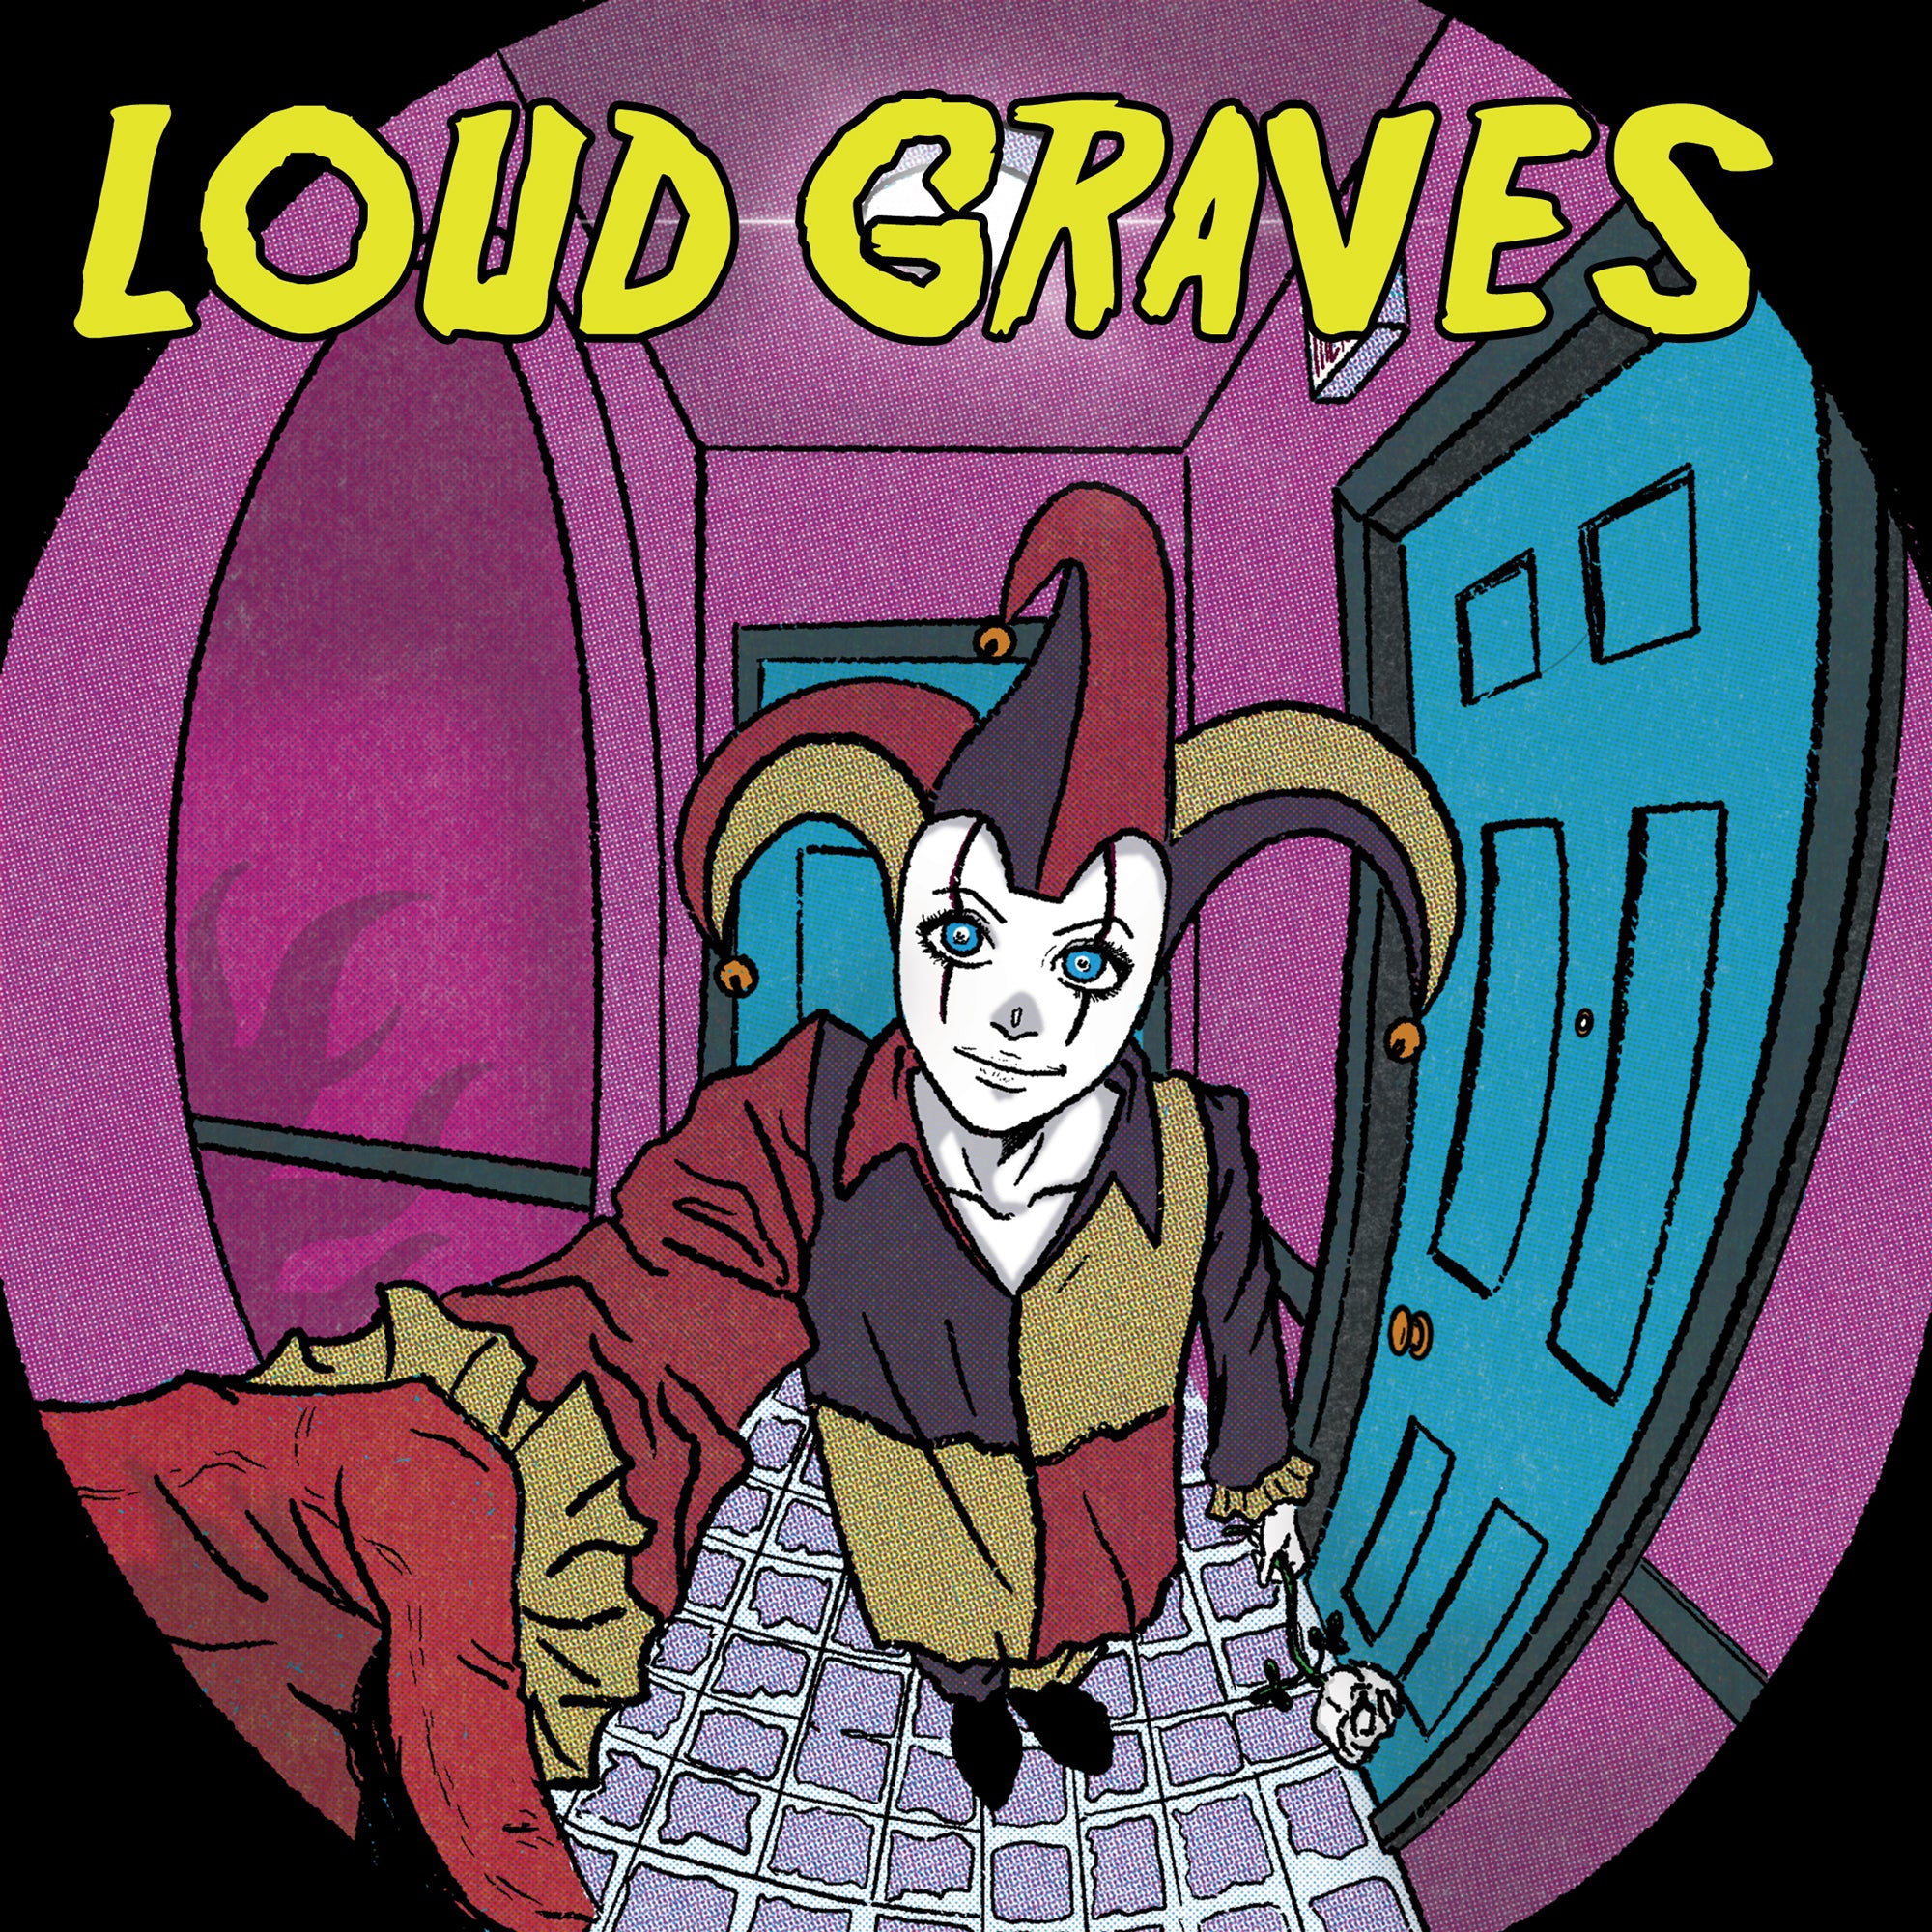 Loud Graves - "The Fool" 7"